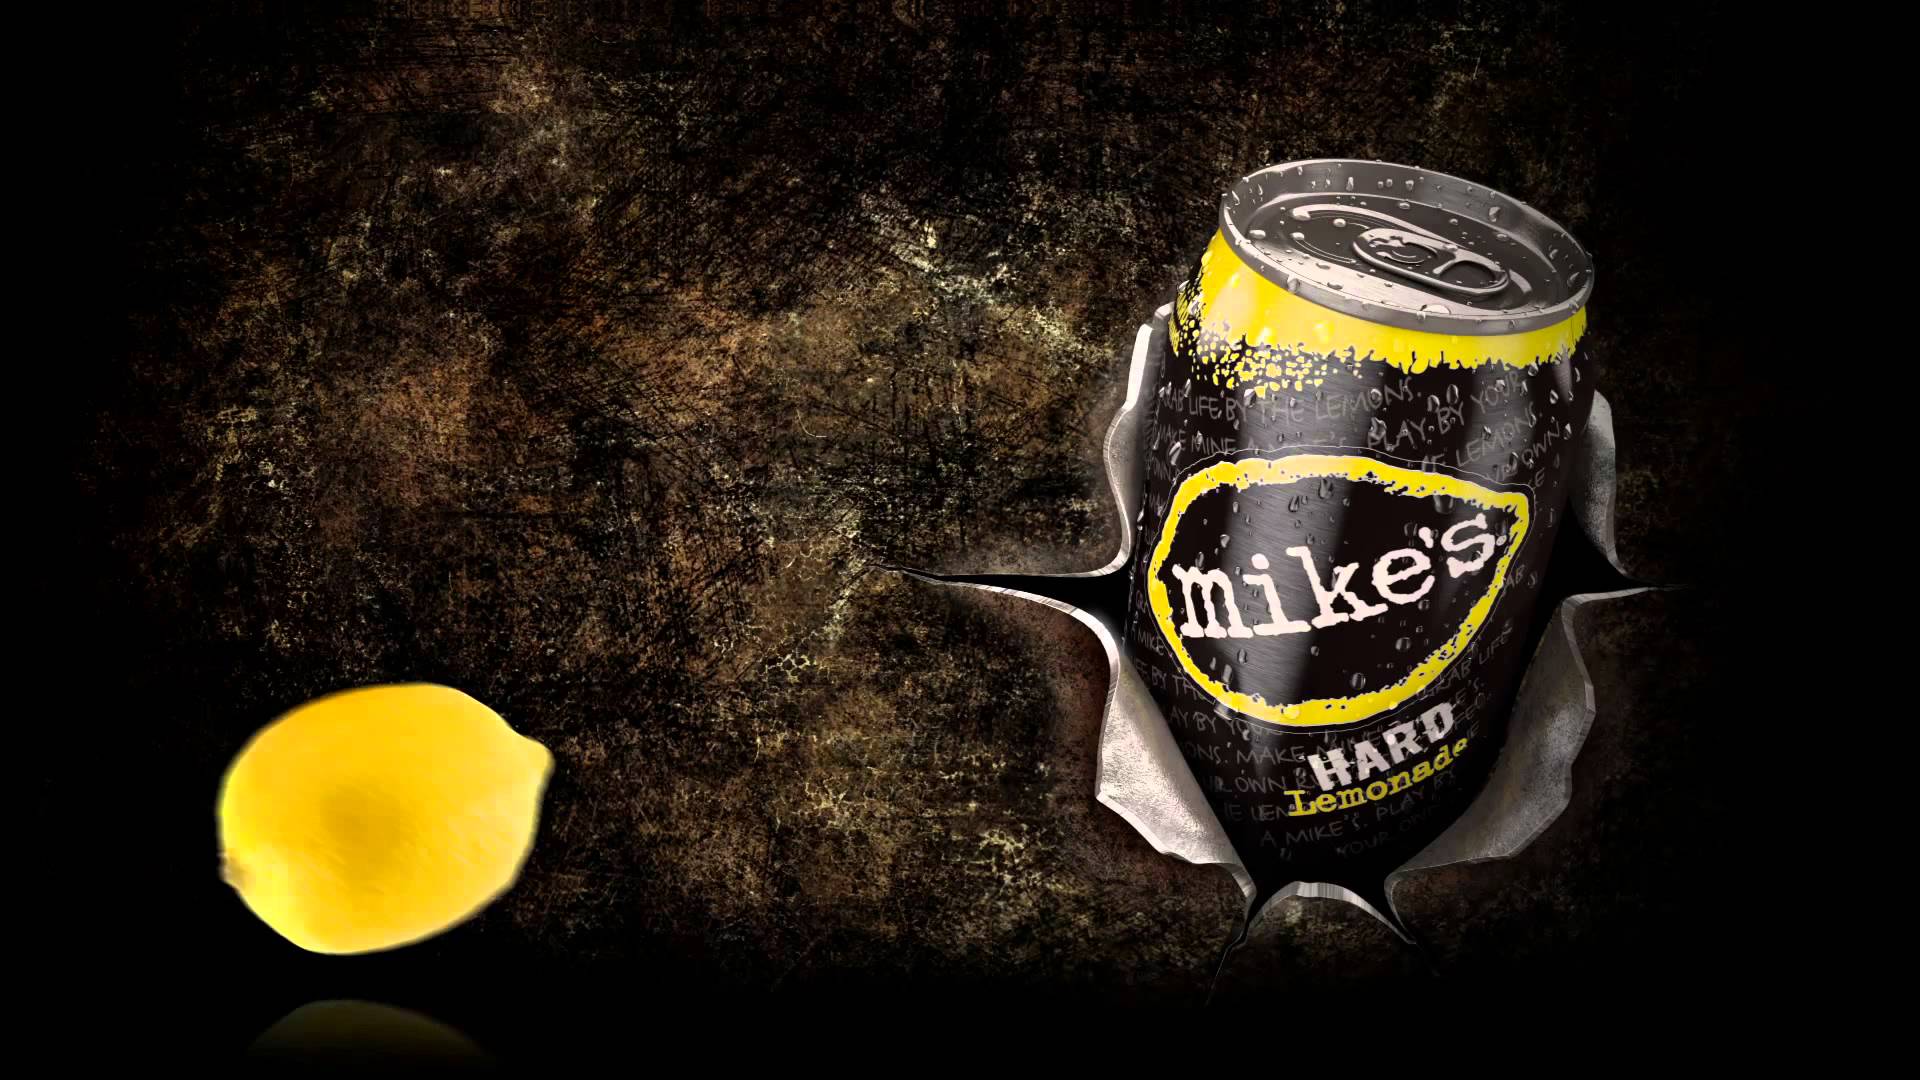 Mikes Hard Lemonade Backgrounds on Wallpapers Vista